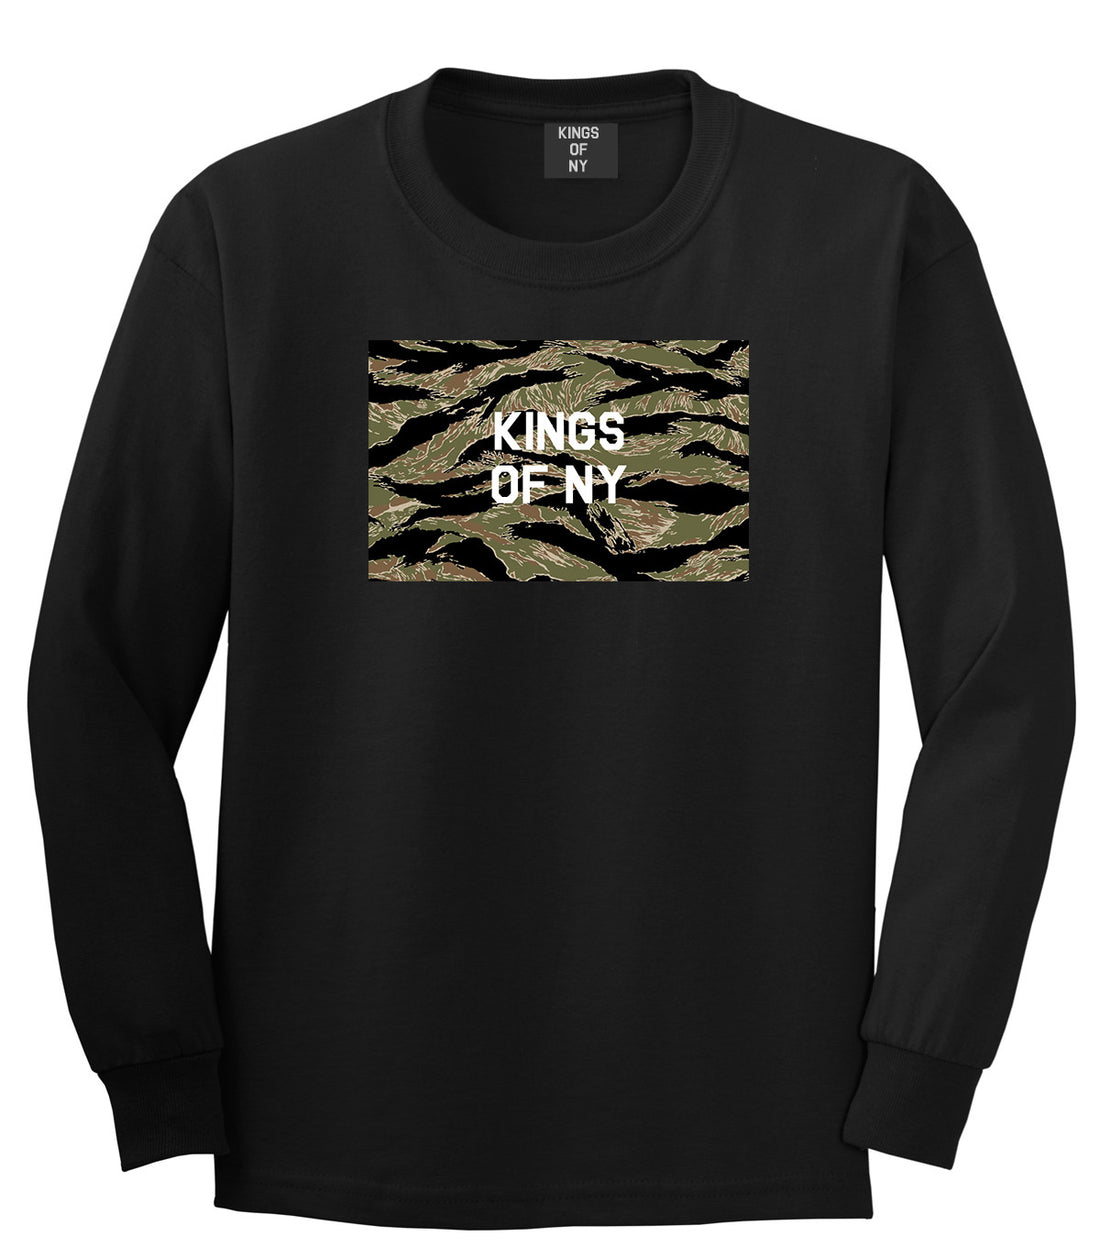 Tiger Stripe Camo Army Long Sleeve T-Shirt in Black